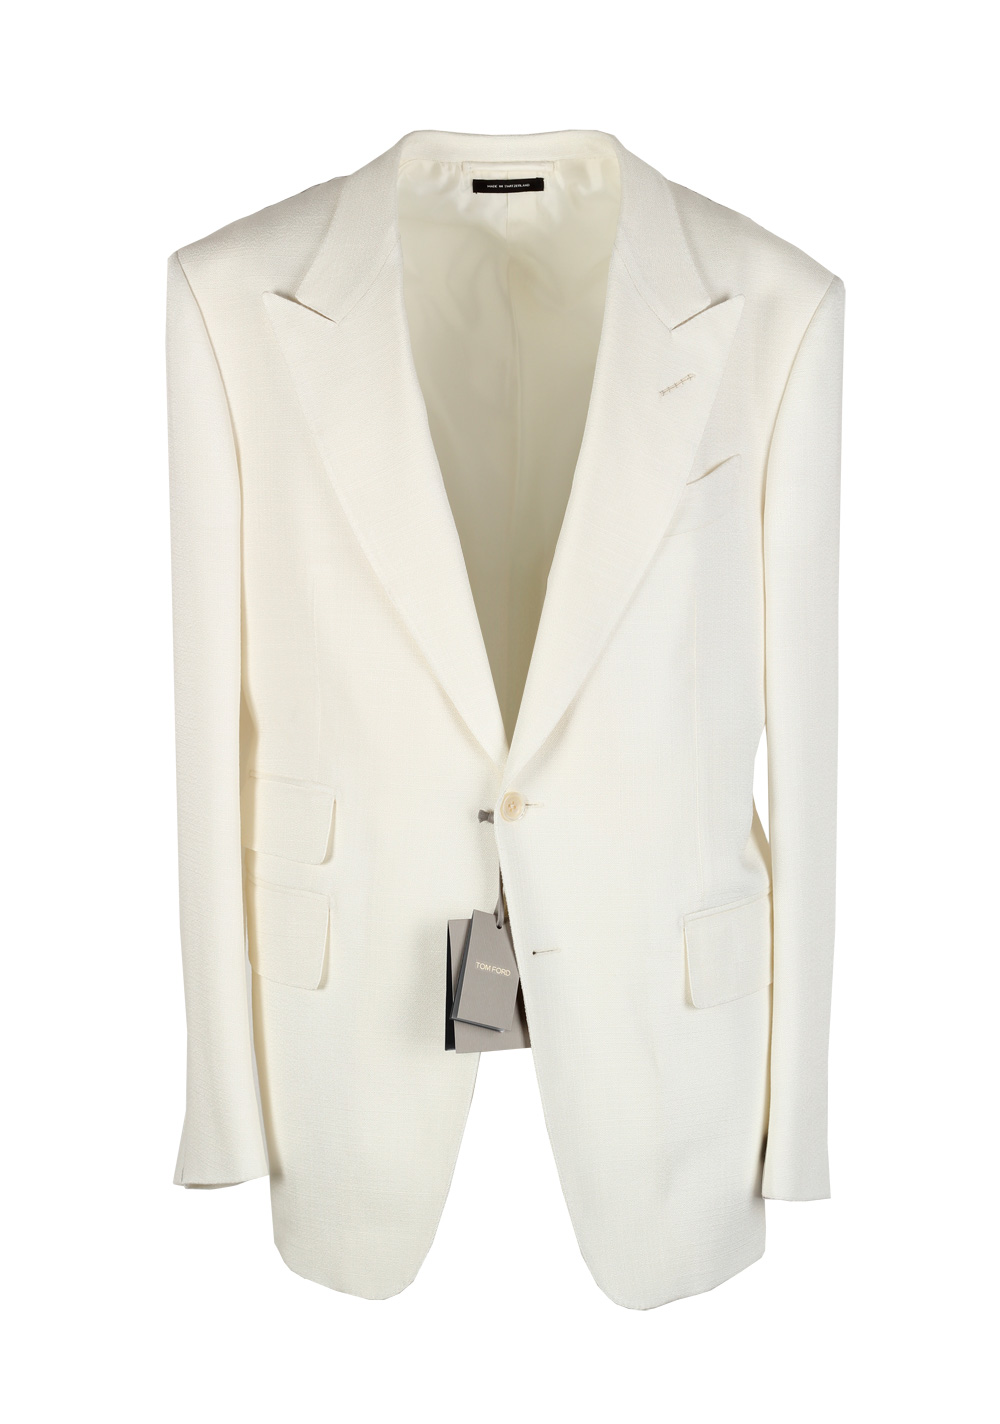 TOM FORD Shelton Off White Sport Coat Size 54 / 44R U.S. Rayon Silk ...